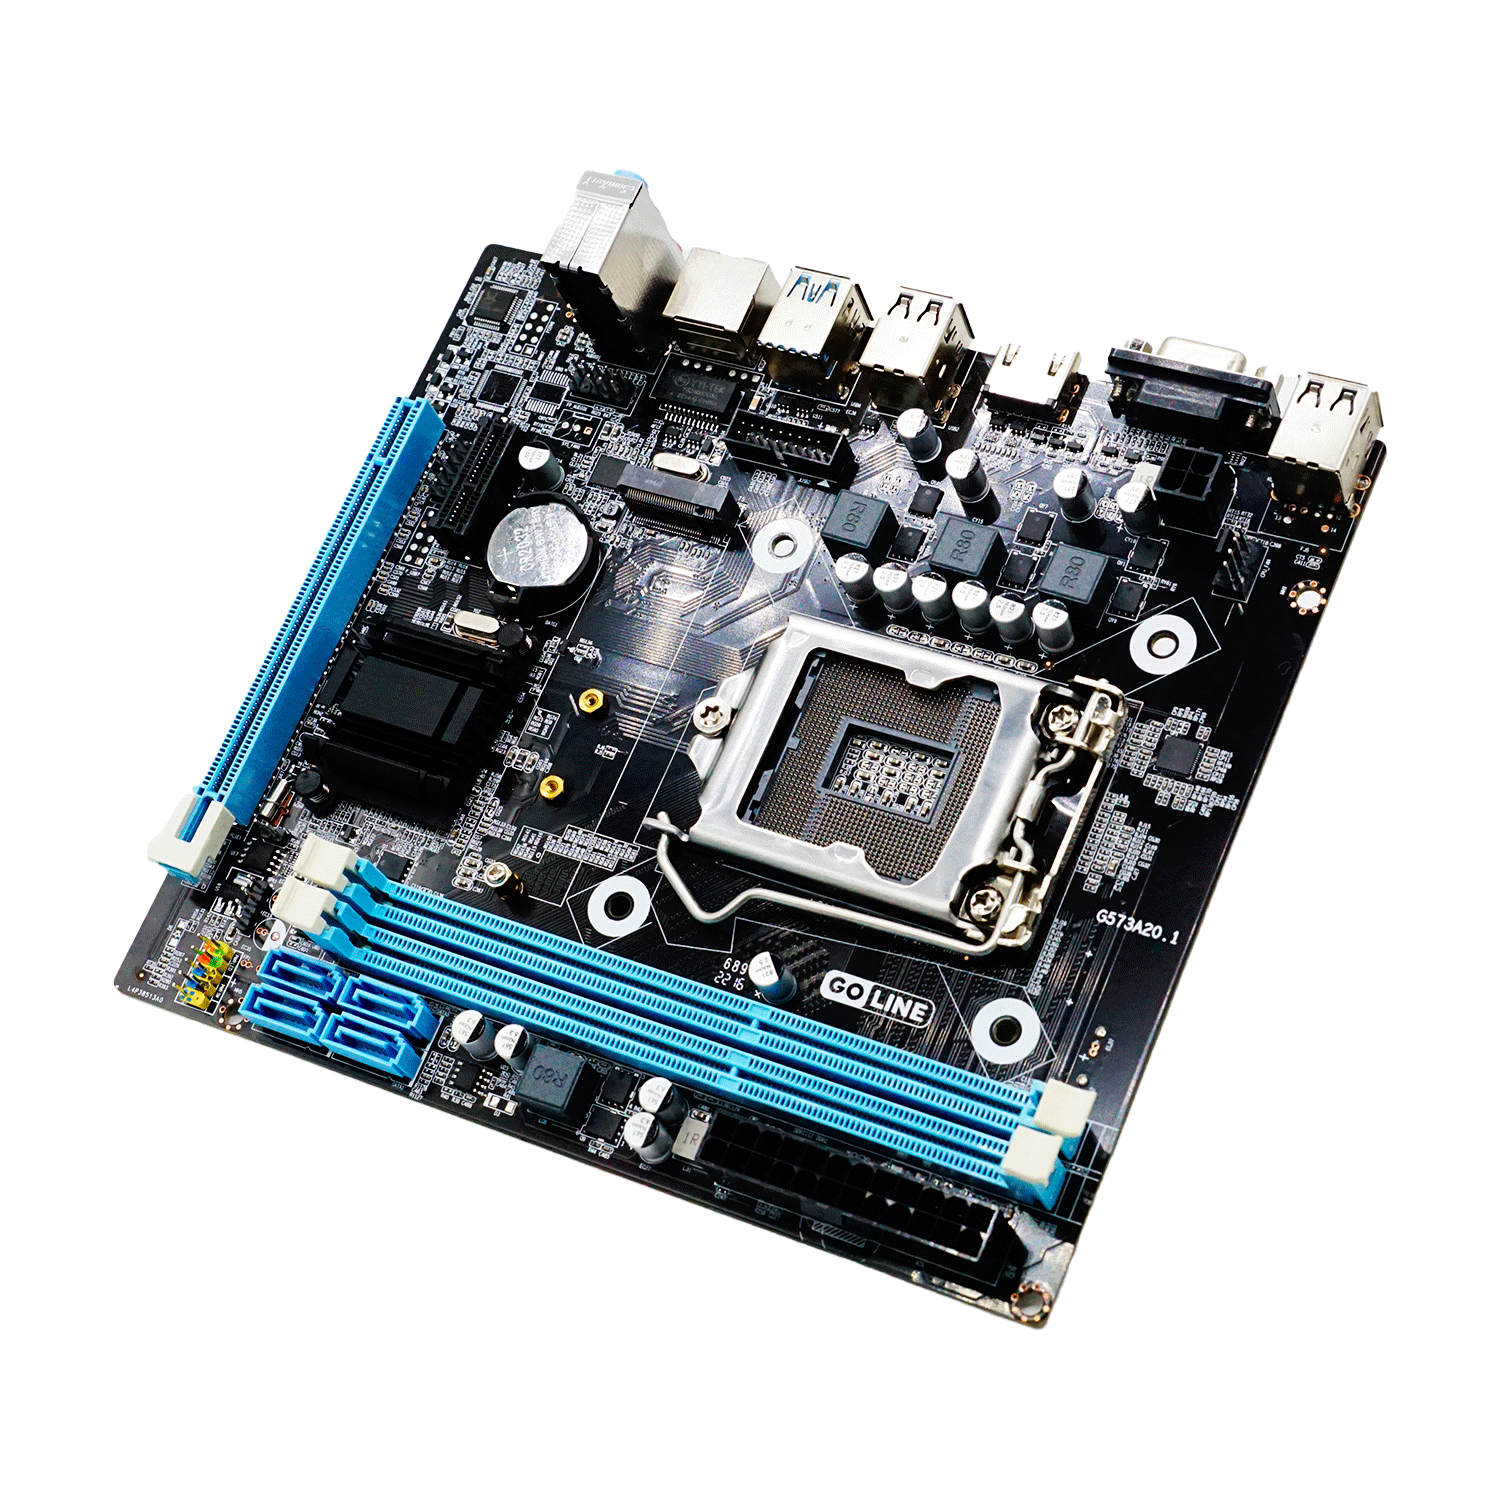 Placa Mãe Goline H81M-G Socket LGA 1150 Chipset Intel H81 DDR3 Micro ATX - (1 Ano Garantia)